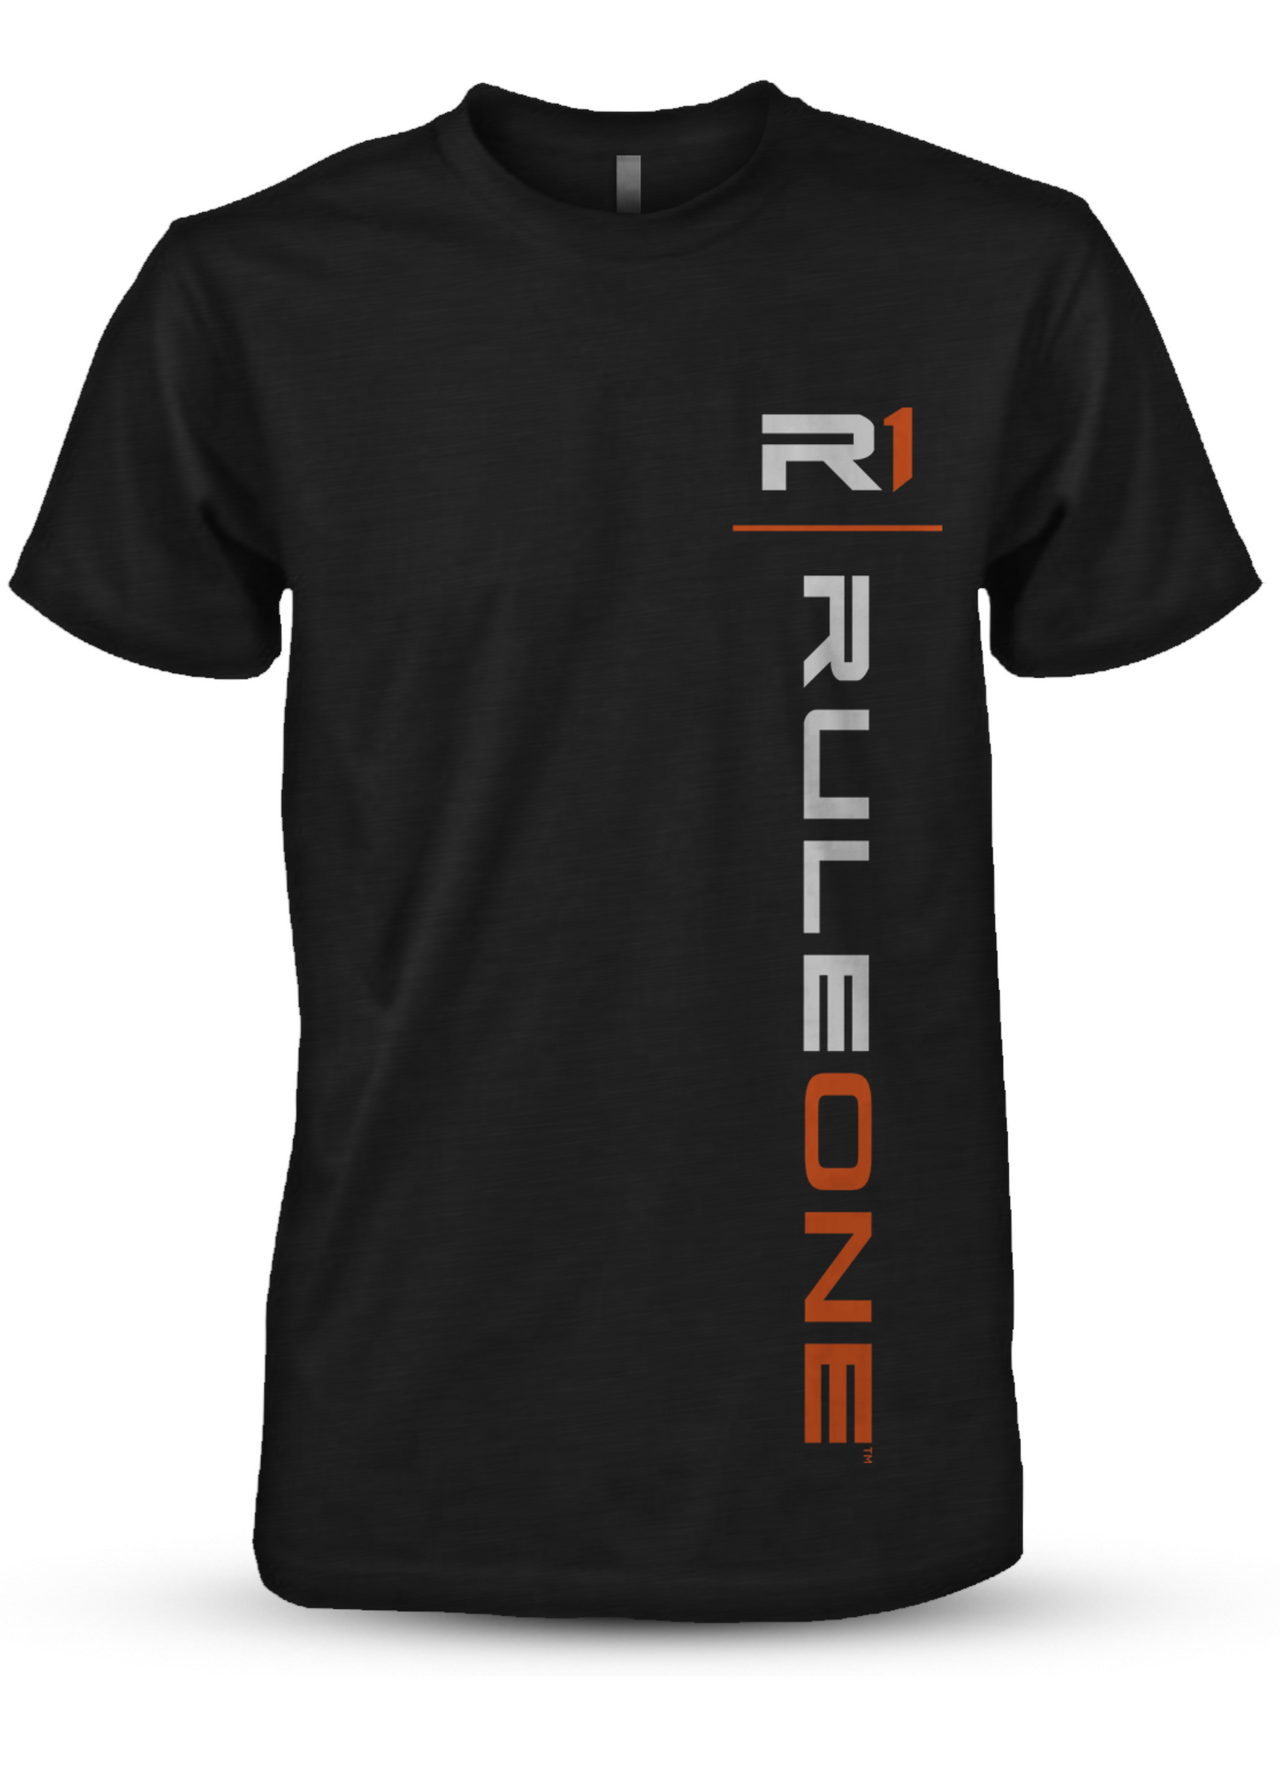 R1 Lifestyle Logo + Website T-Shirt